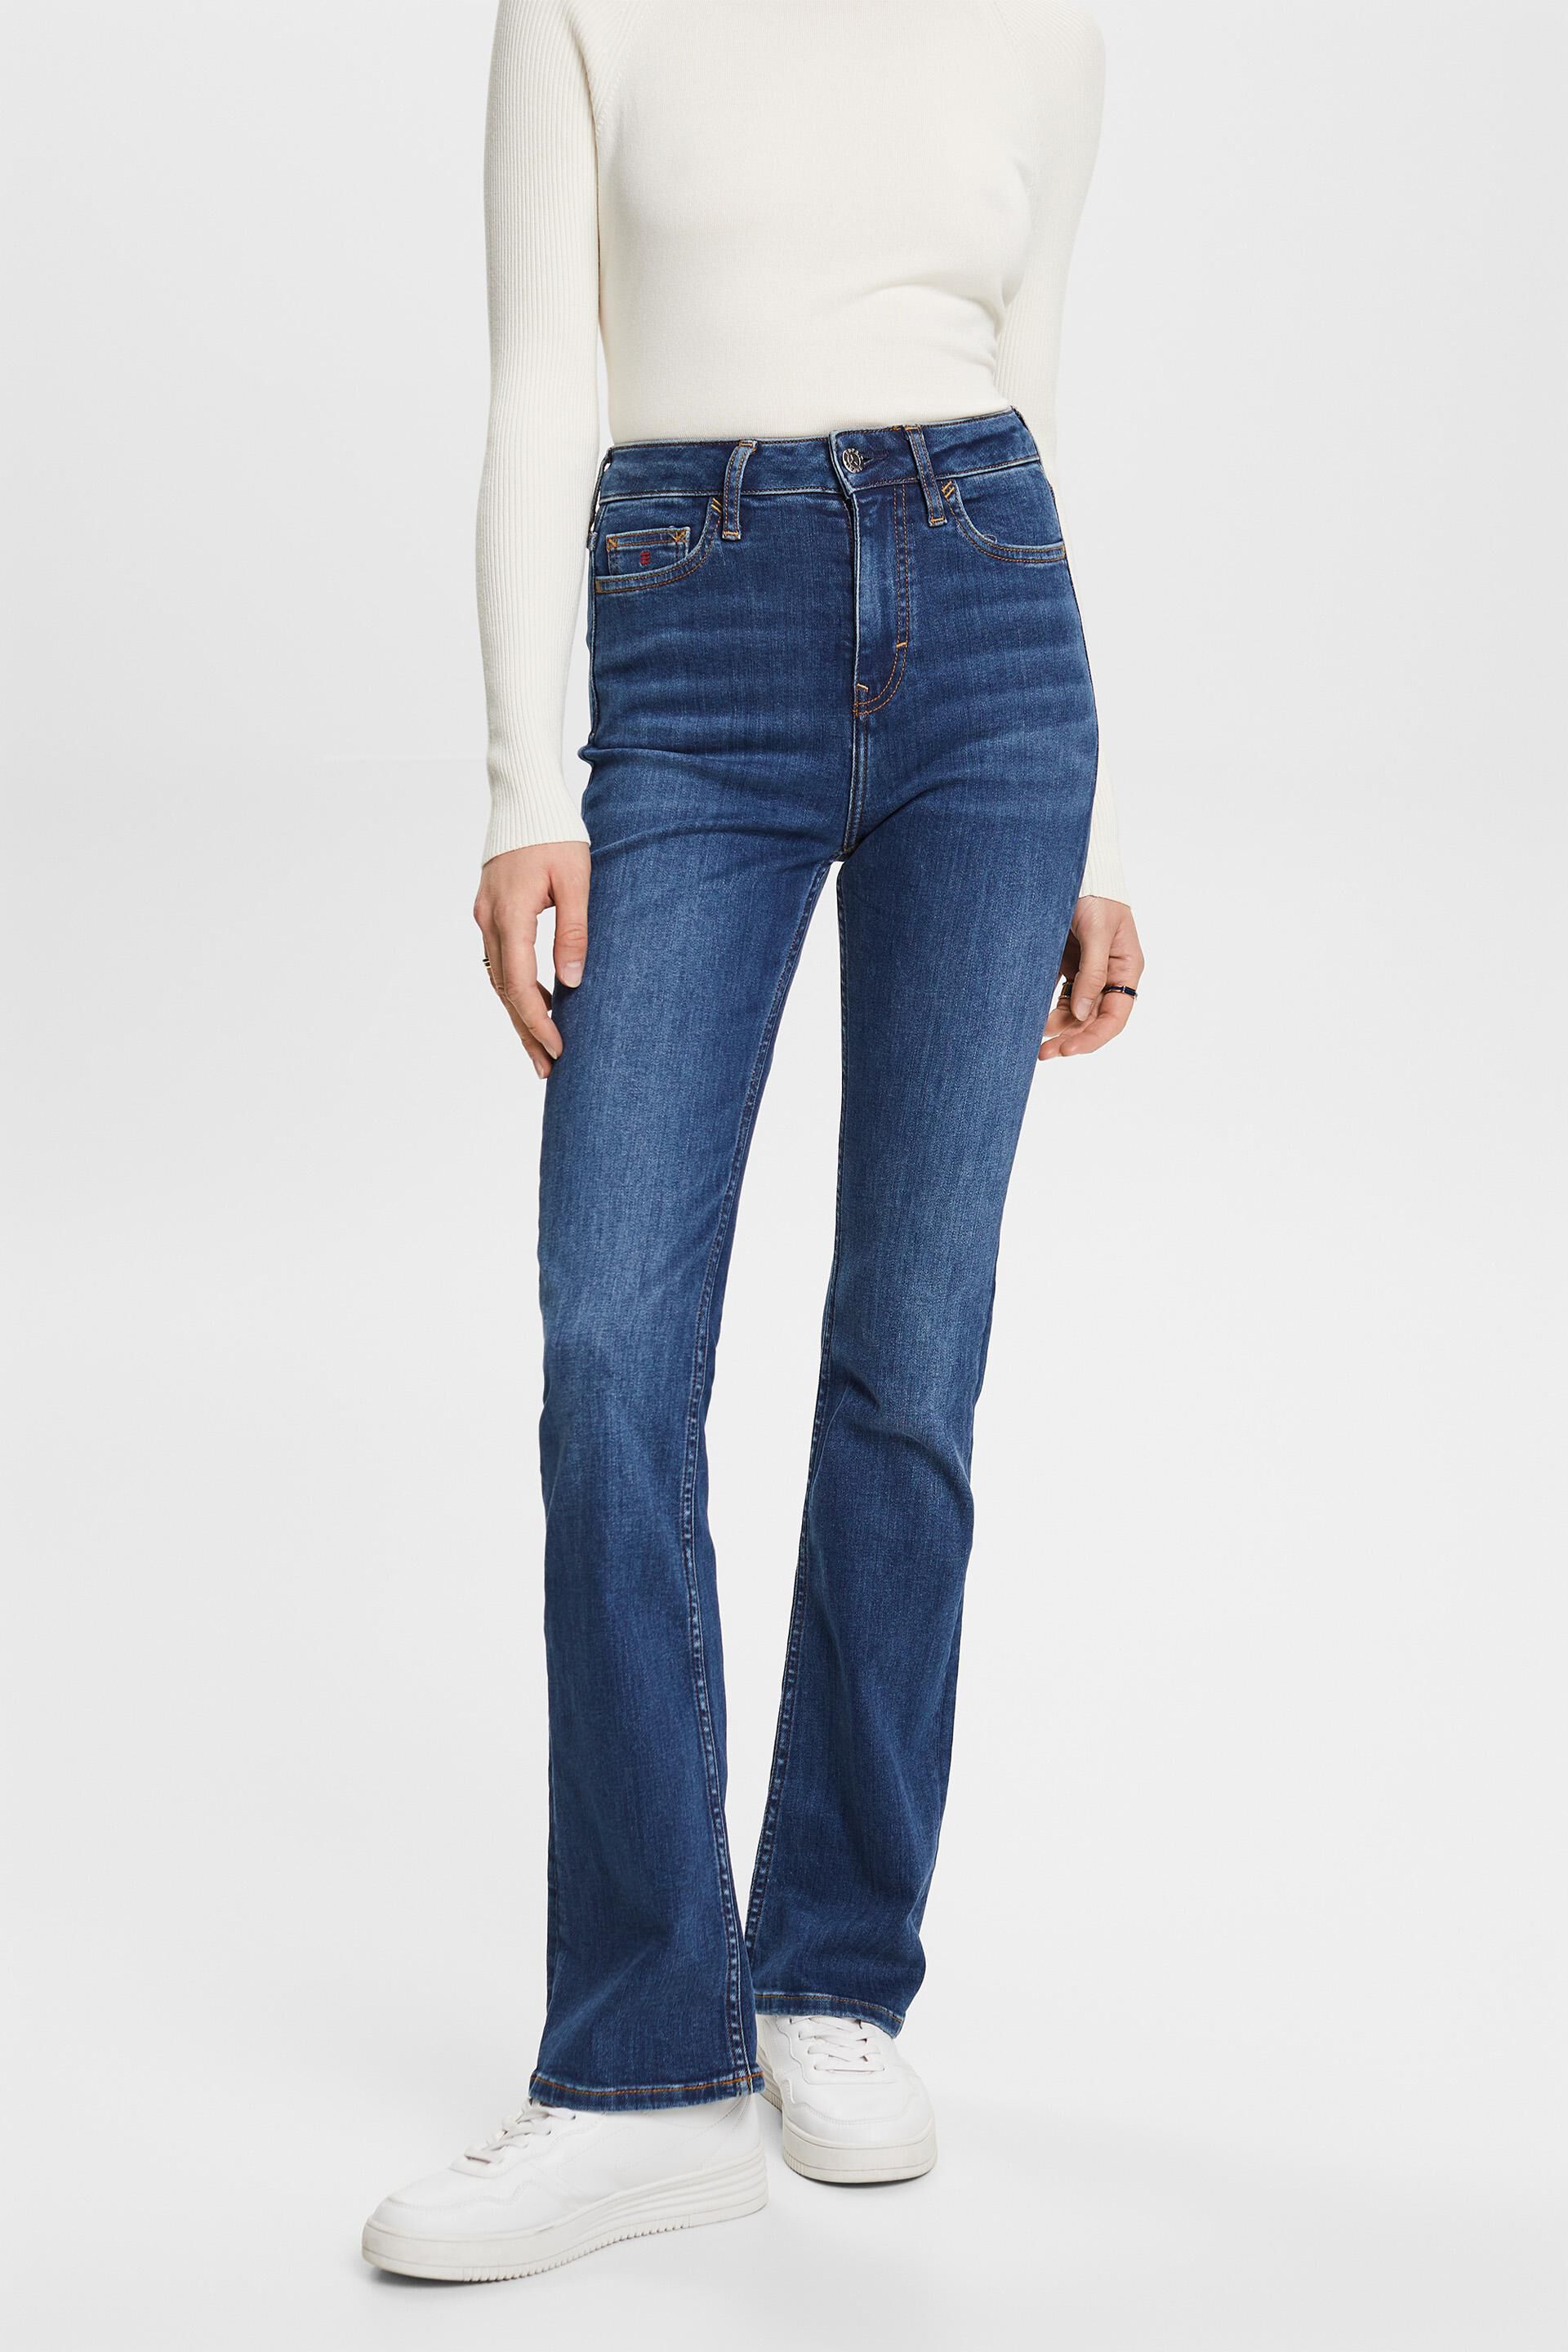 Esprit Premium high-rise bootcut jeans